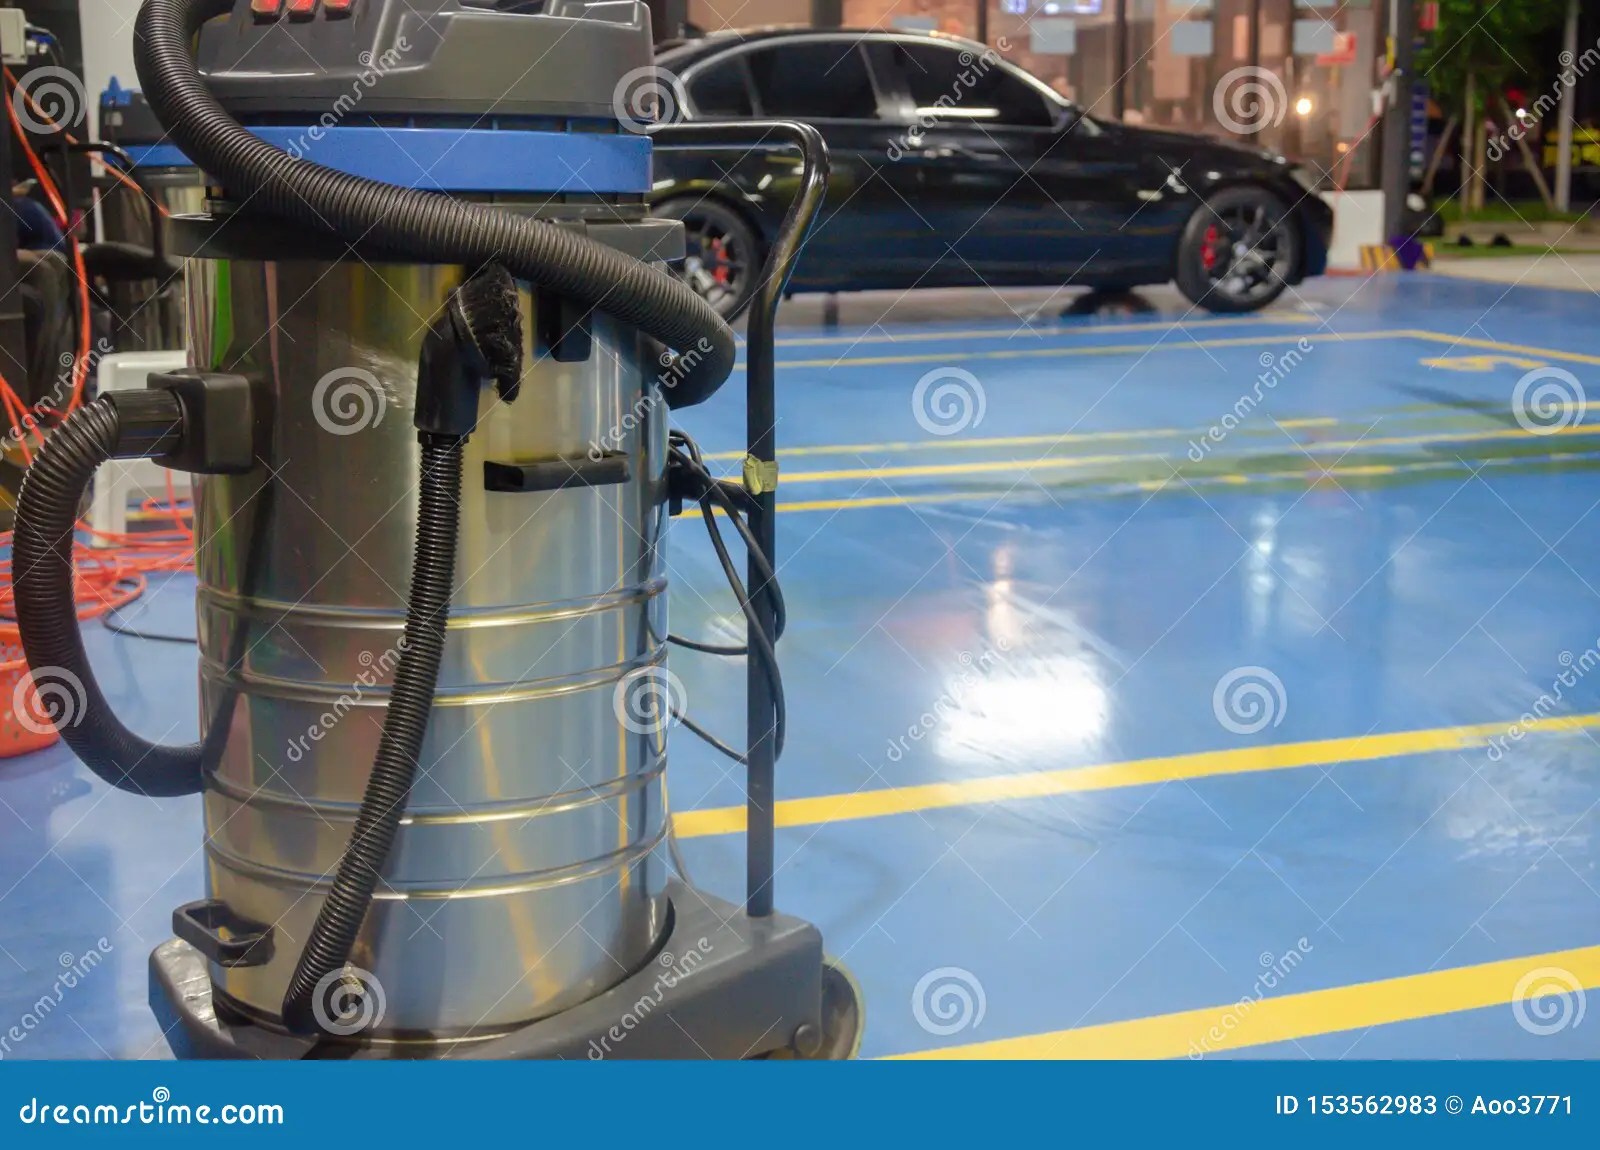 Classic single door vacuum systems new! Car Wash Omaha Free Vacuum at Cars